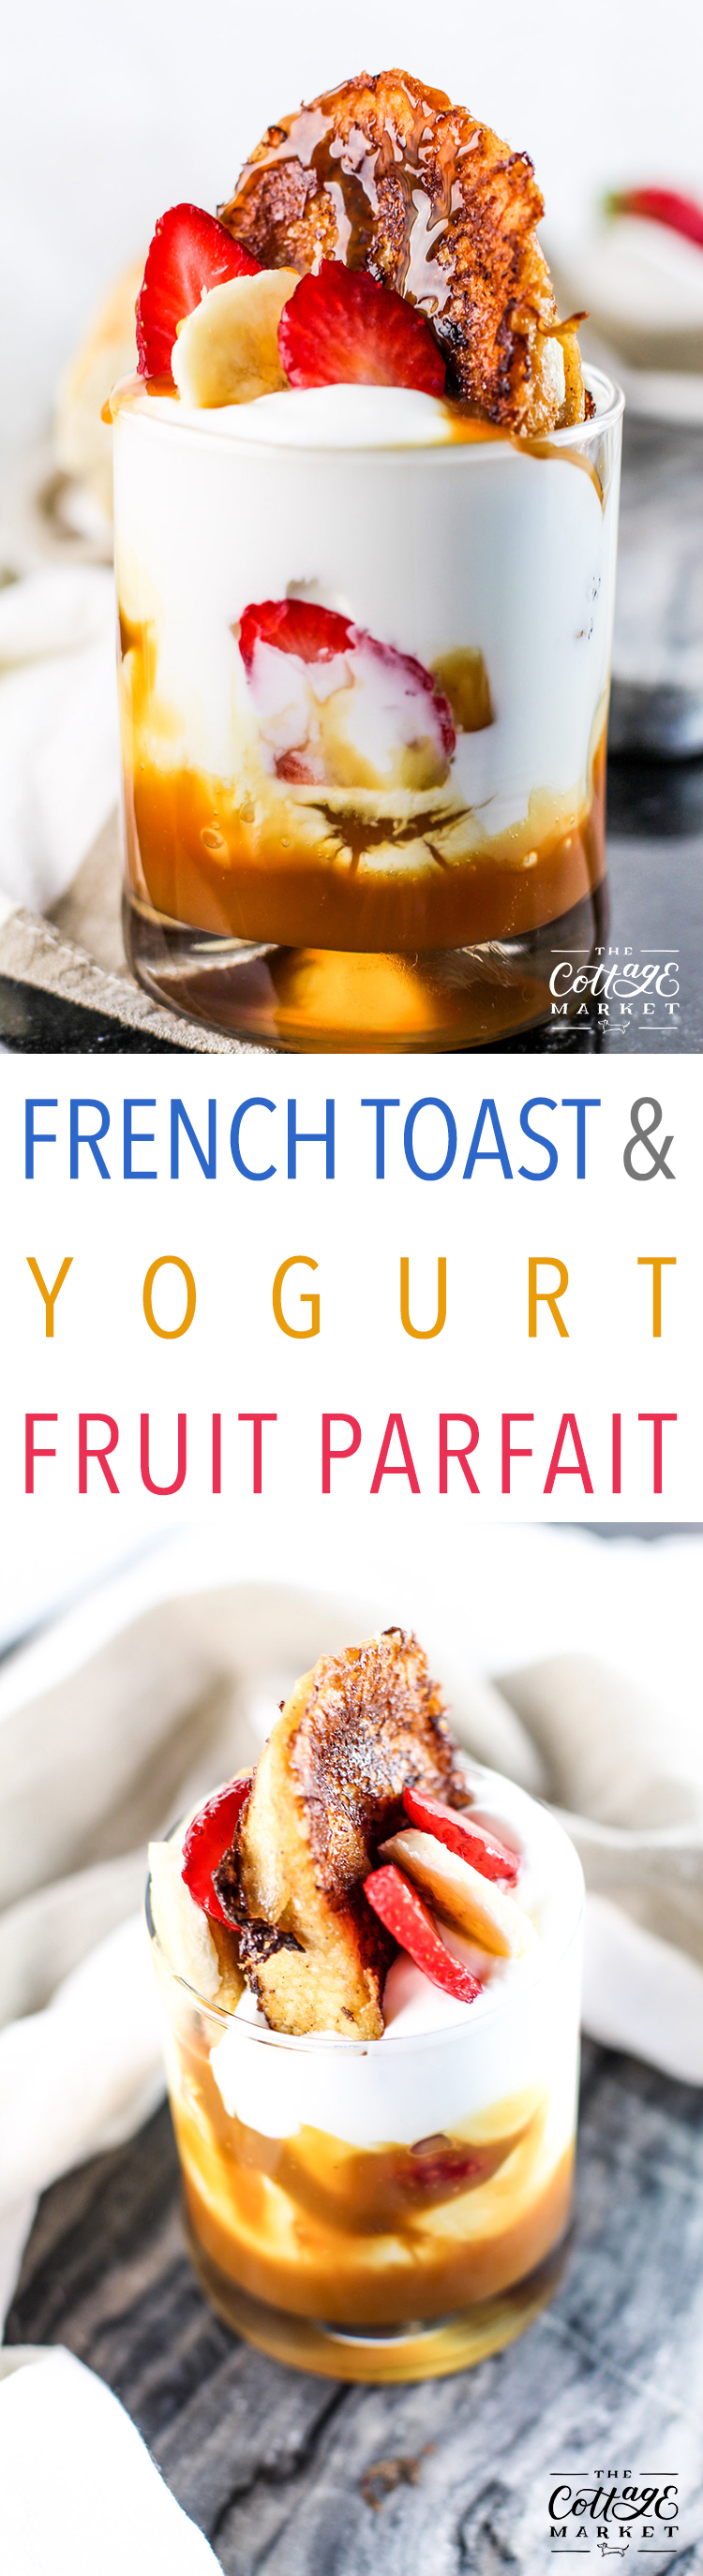 http://thecottagemarket.com/wp-content/uploads/2017/05/French-Toast-Yogurt-Fruit-Parfait-tower-1.jpg